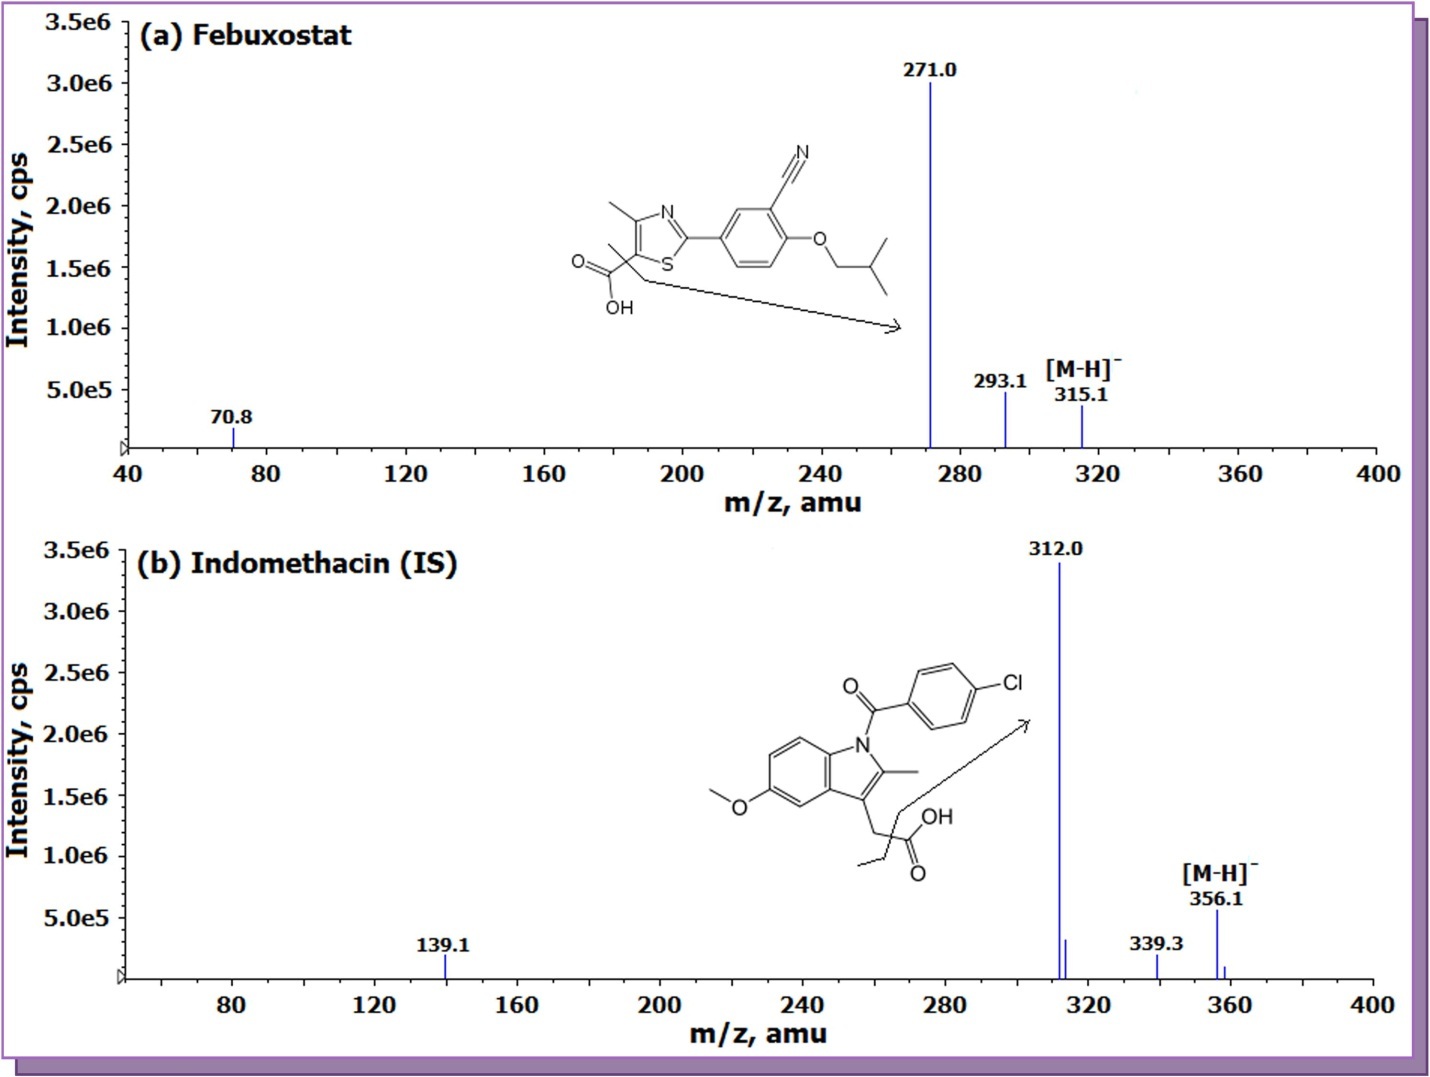  Product ion mass spectra of (a) febuxostat (m/z 315.1  → 271.0 , scan range 40-400 amu) and (b) indomethacin (IS, m/z 356.1 → 312.0, scan range 50-400 amu) in negative ionization mode.